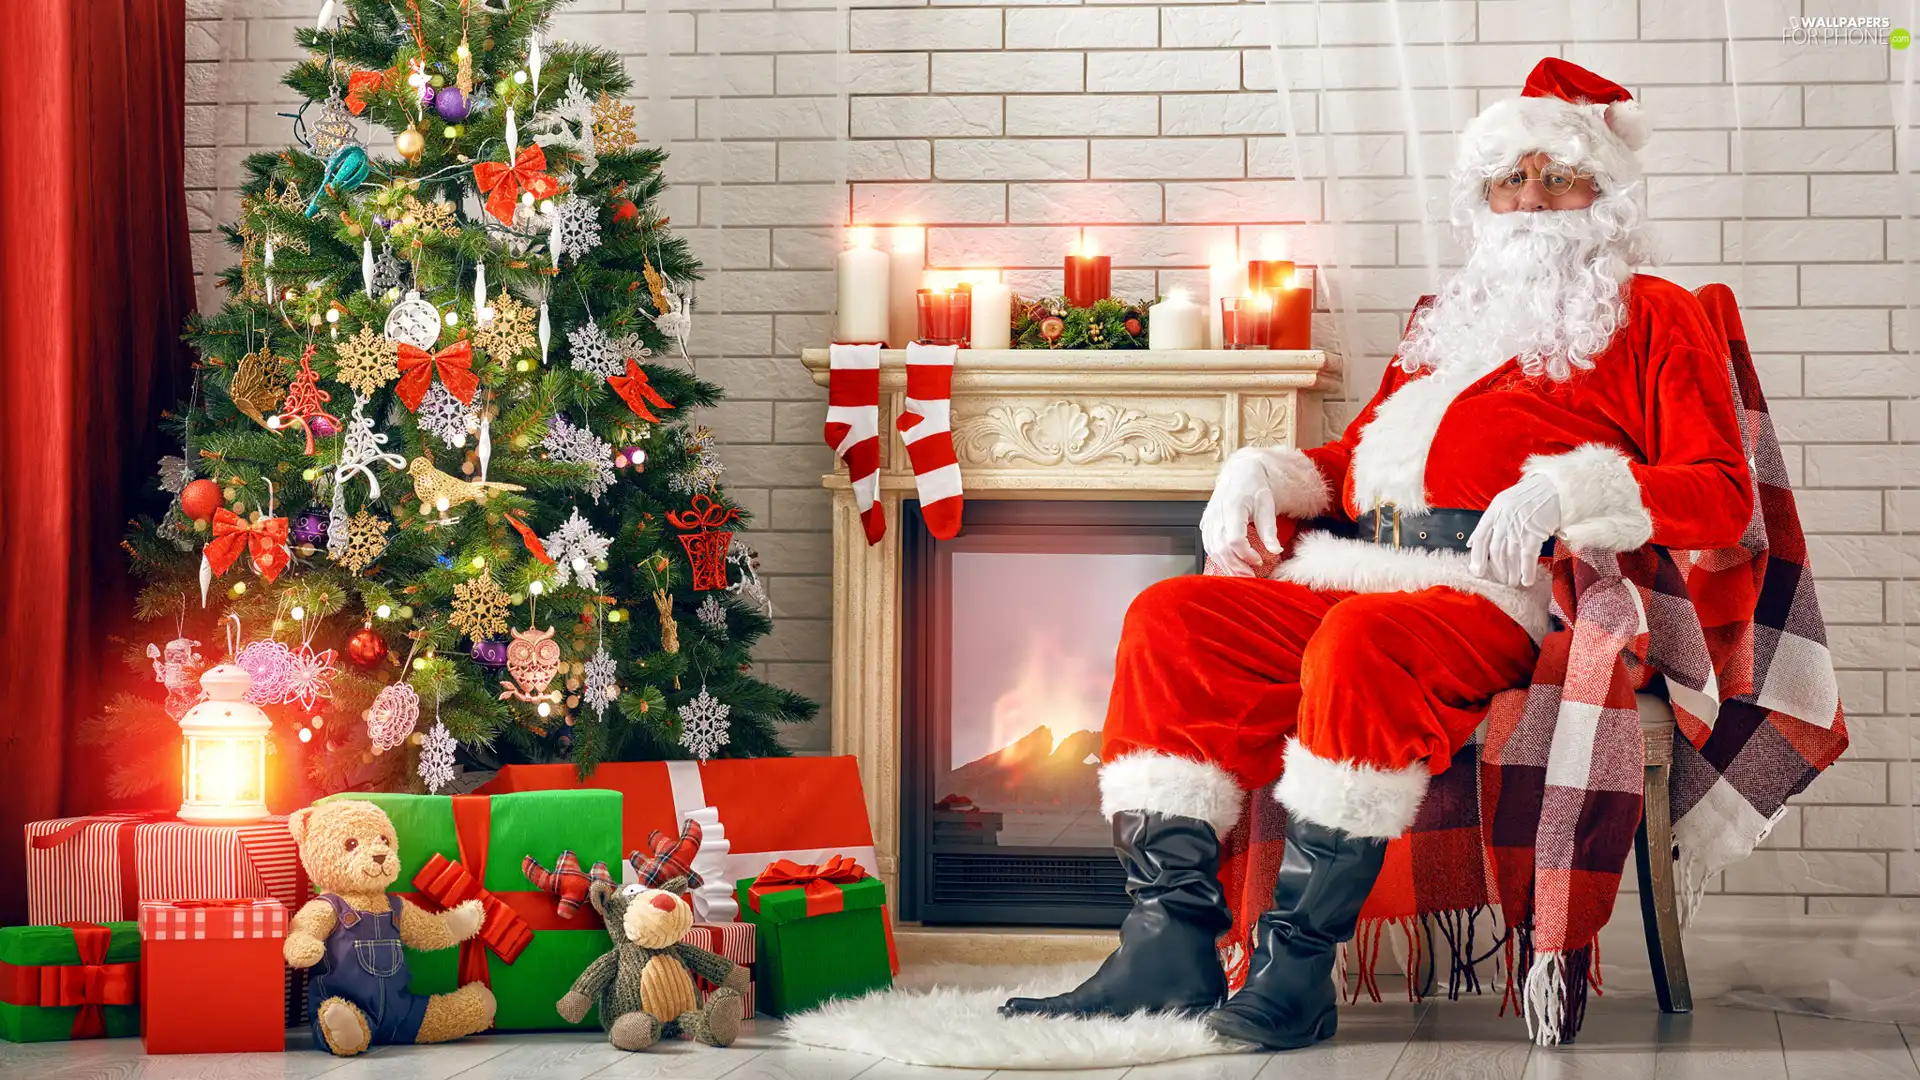 gifts, burner chimney, Santa, christmas tree, Christmas